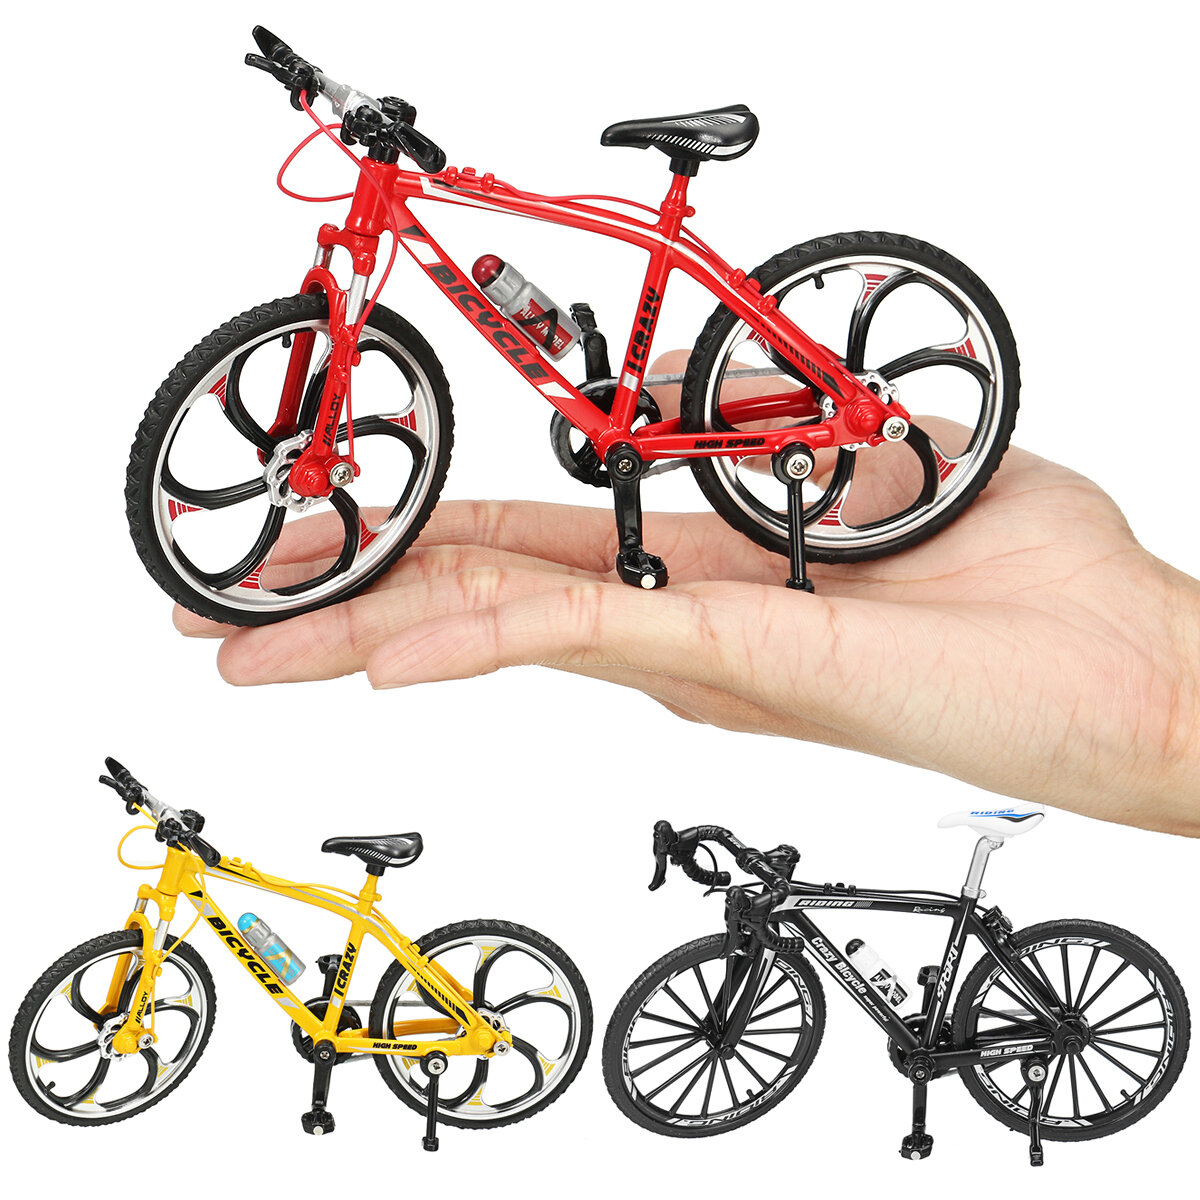 bike toy model